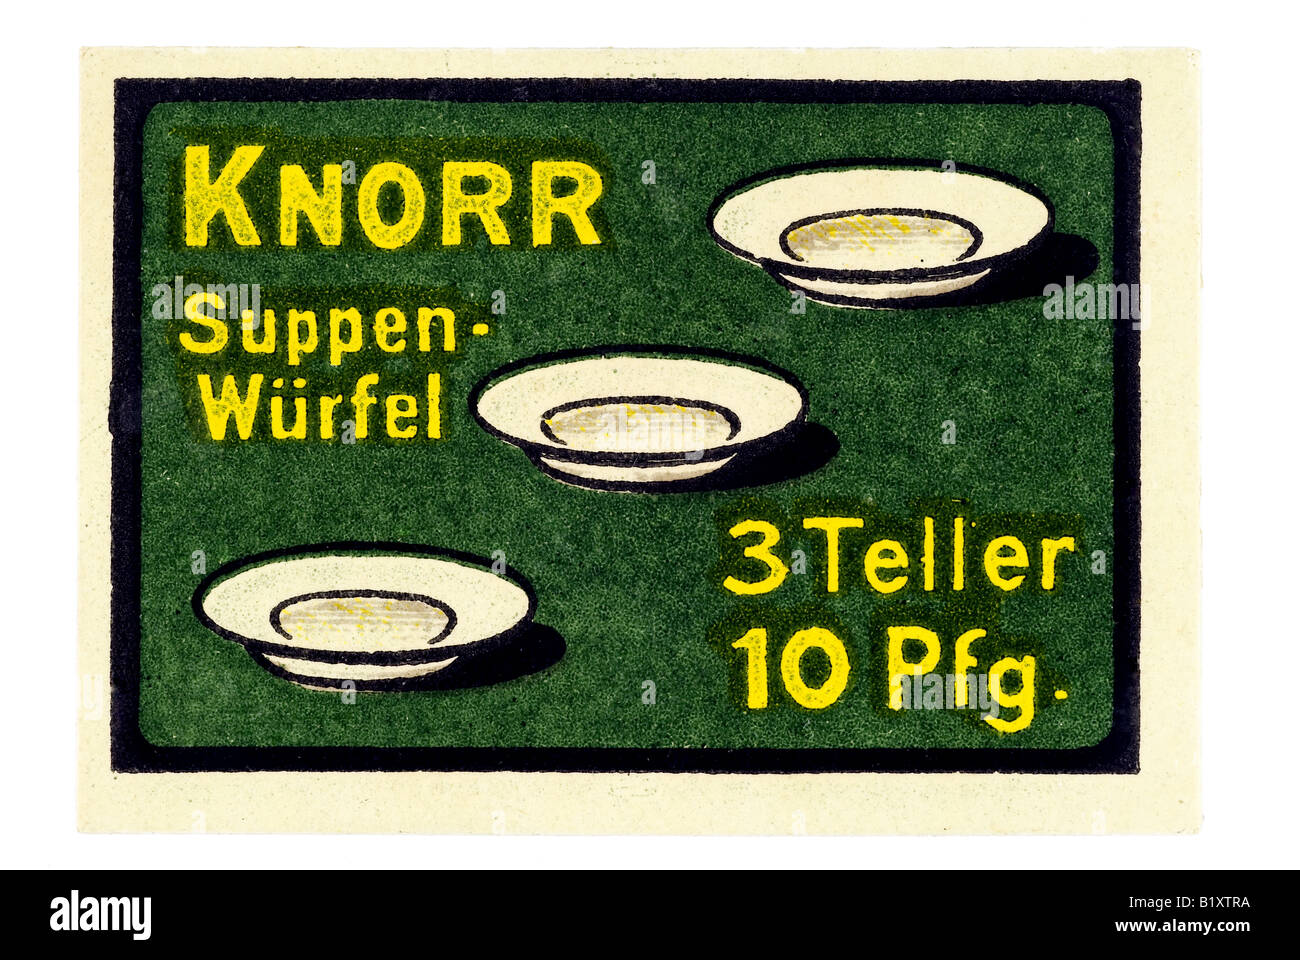 trading stamp Knorr Suppen Würfel 3 Teller 10Pfg Teller Stock Photo